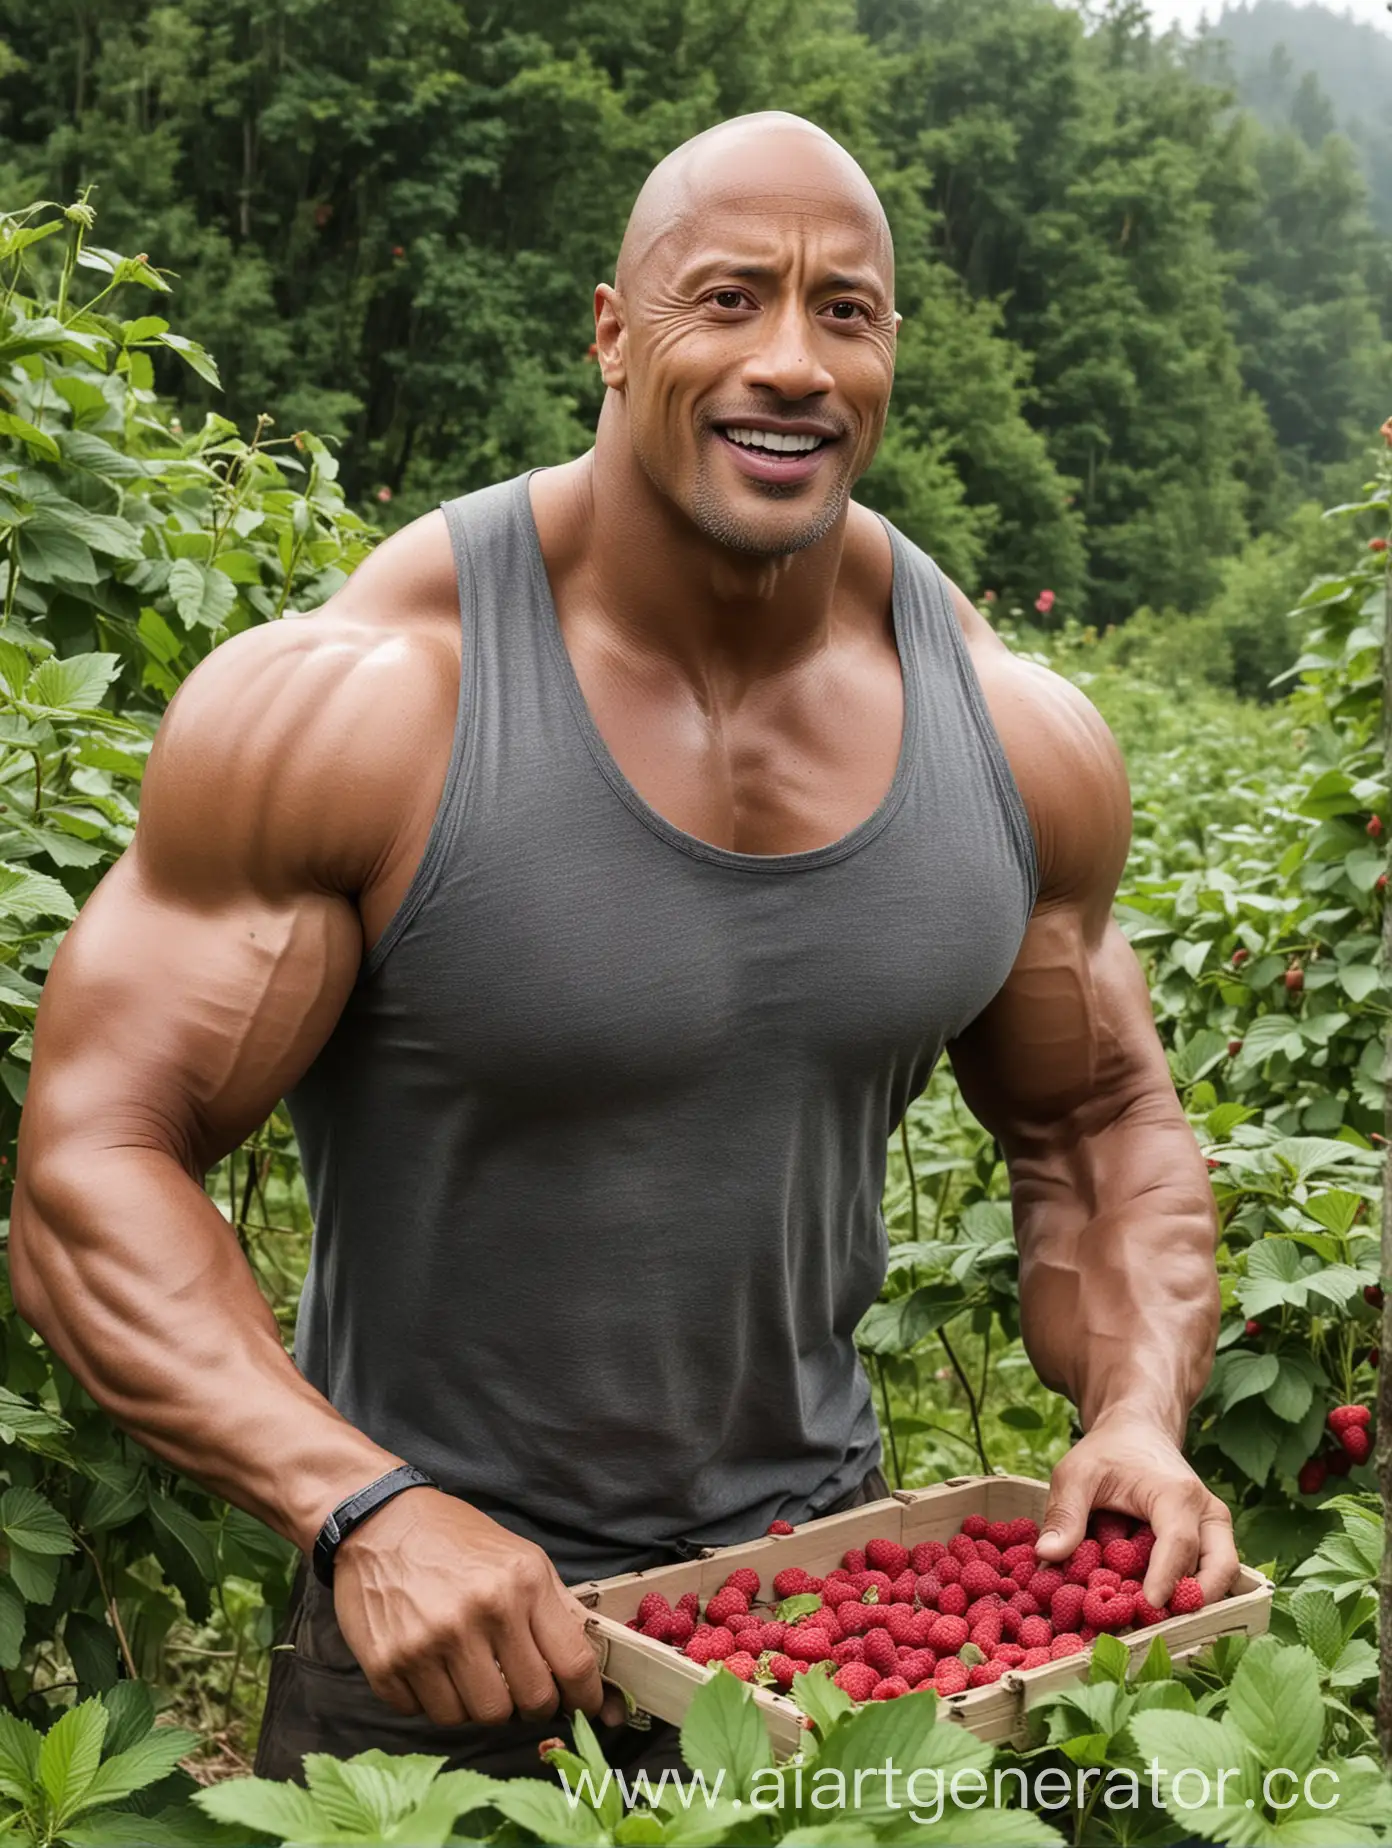 Dwayne-Johnson-Picking-Raspberries-in-Sunny-Orchard